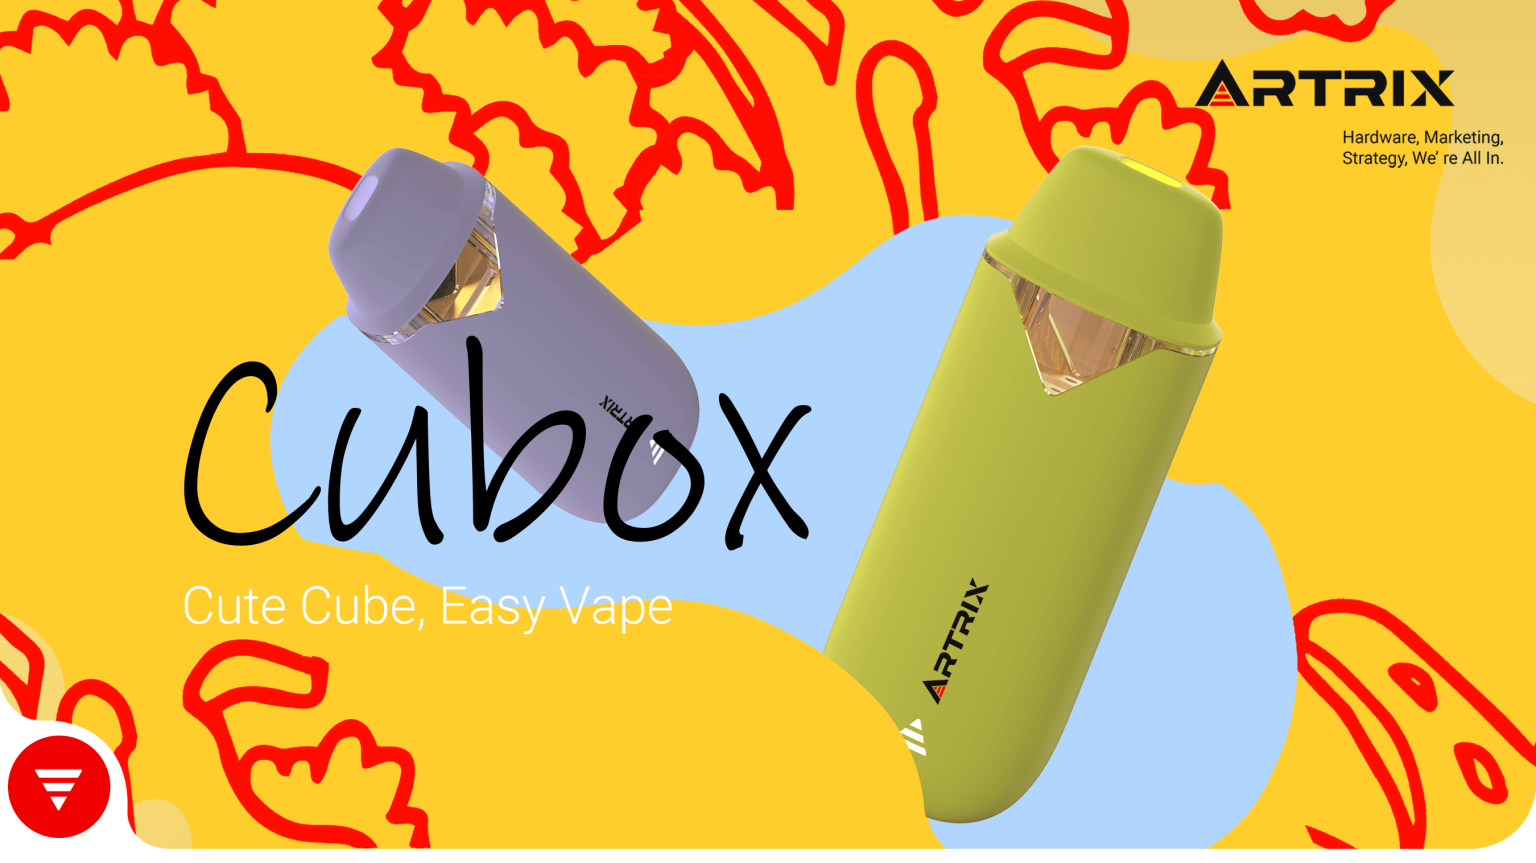 cubox-postless disposable